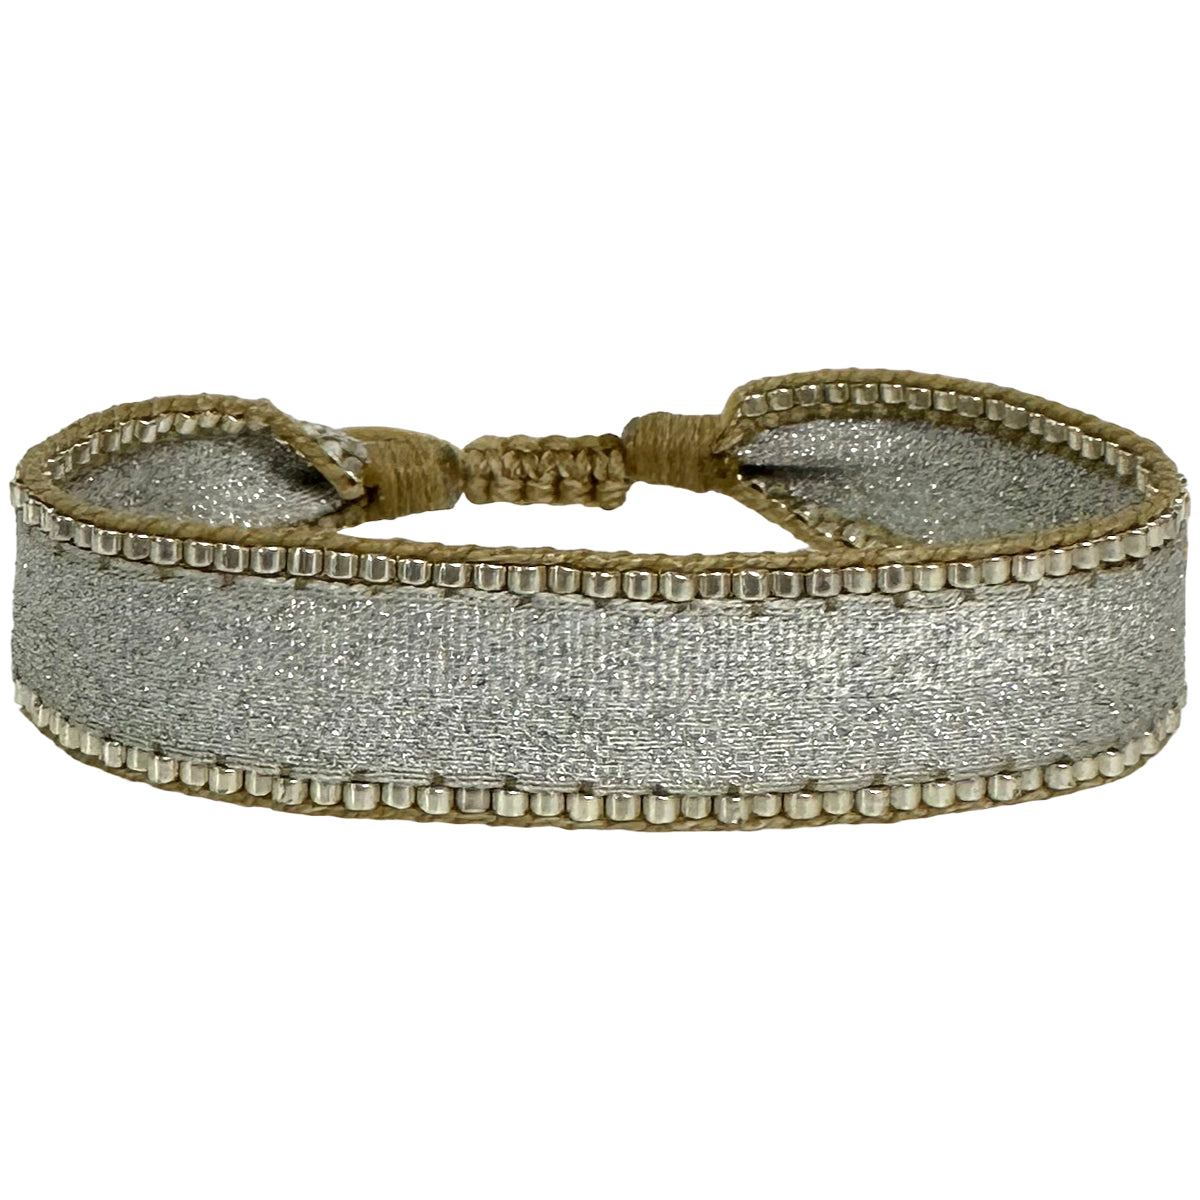 Kenia Handmade Bracelet In Silver